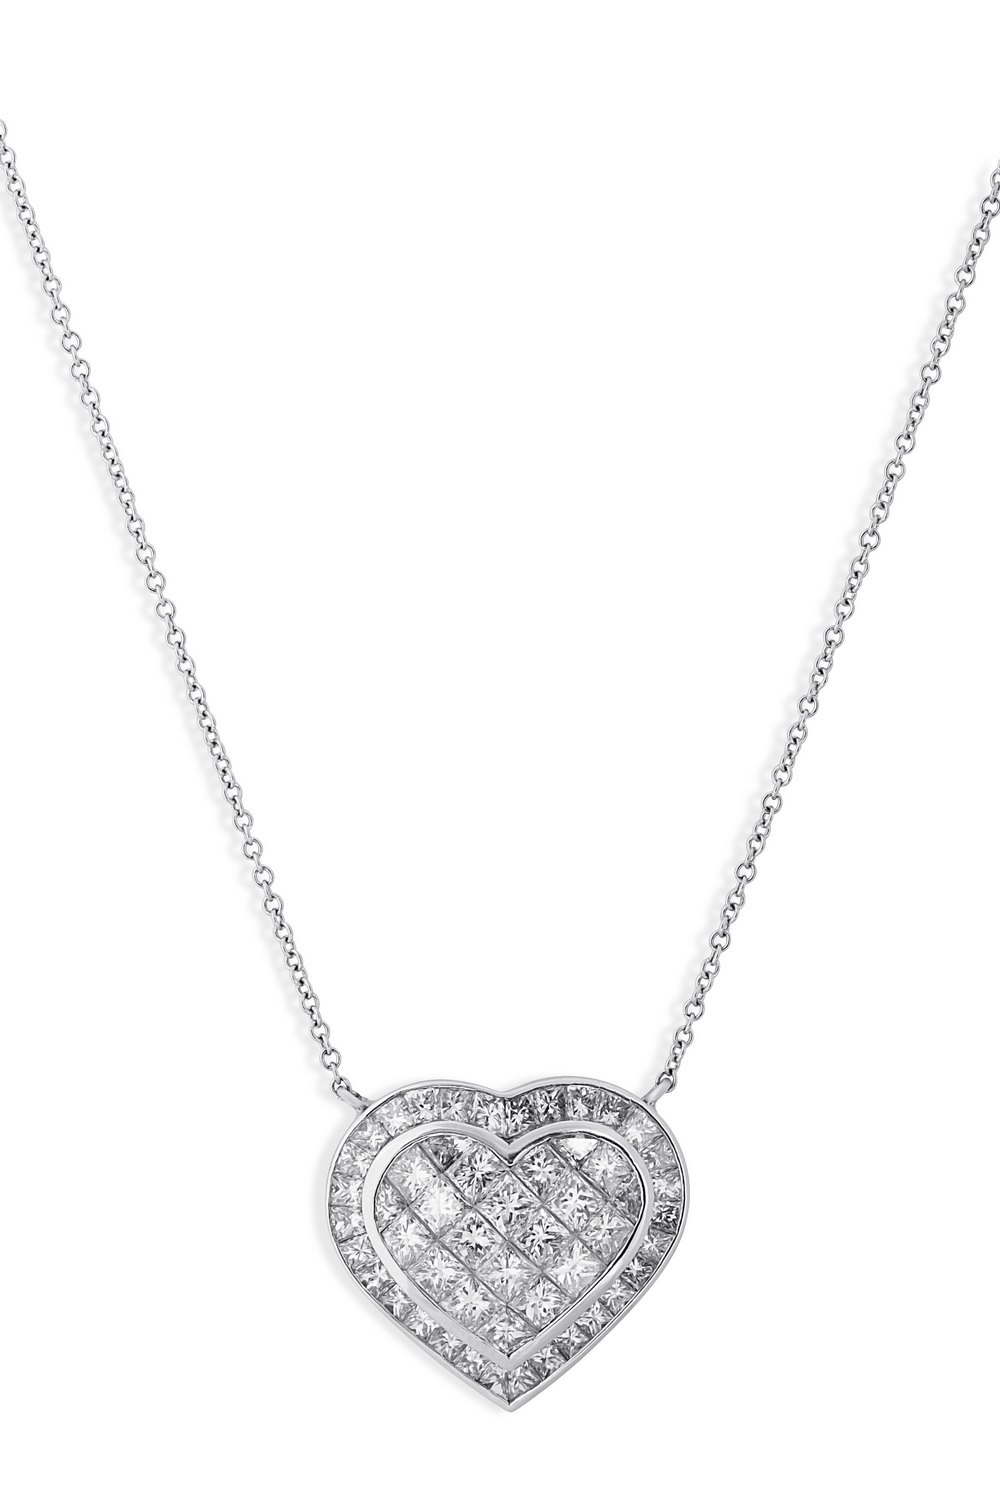 KESSARIS Heart Diamond Cluster Pendant Necklace KOP70013